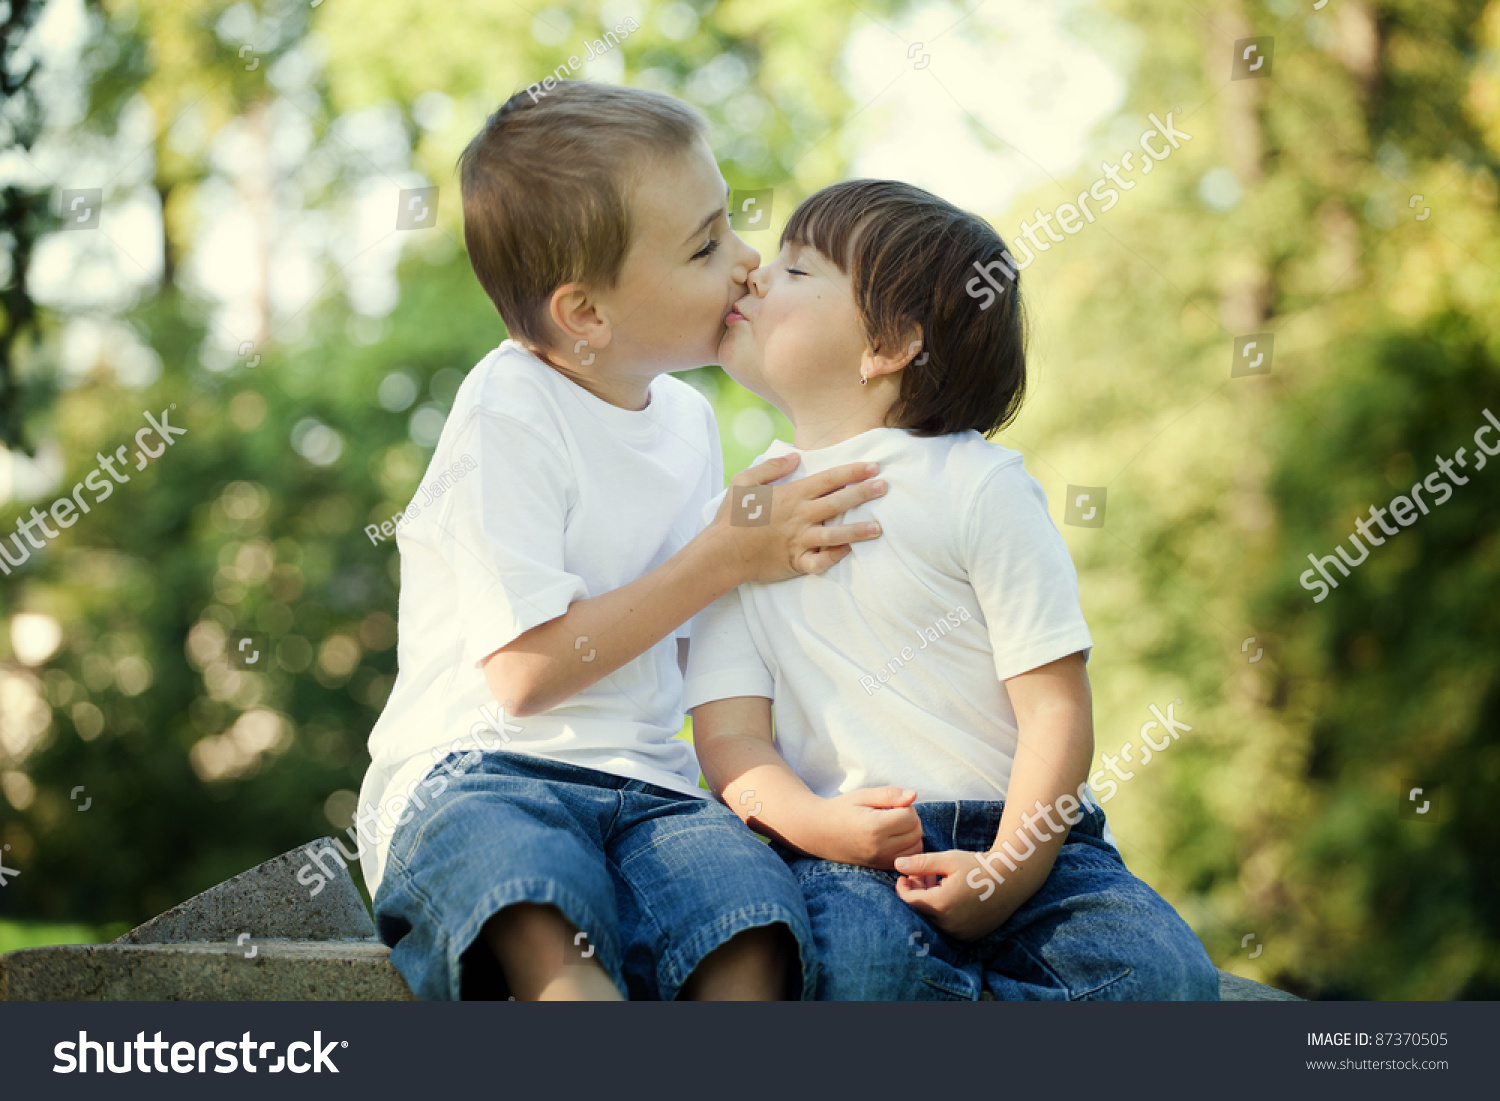 Boys kiss girls. Мальчик целует мальчика. Поцелуи мальчик с мальчиком. Два мальчика целуются.